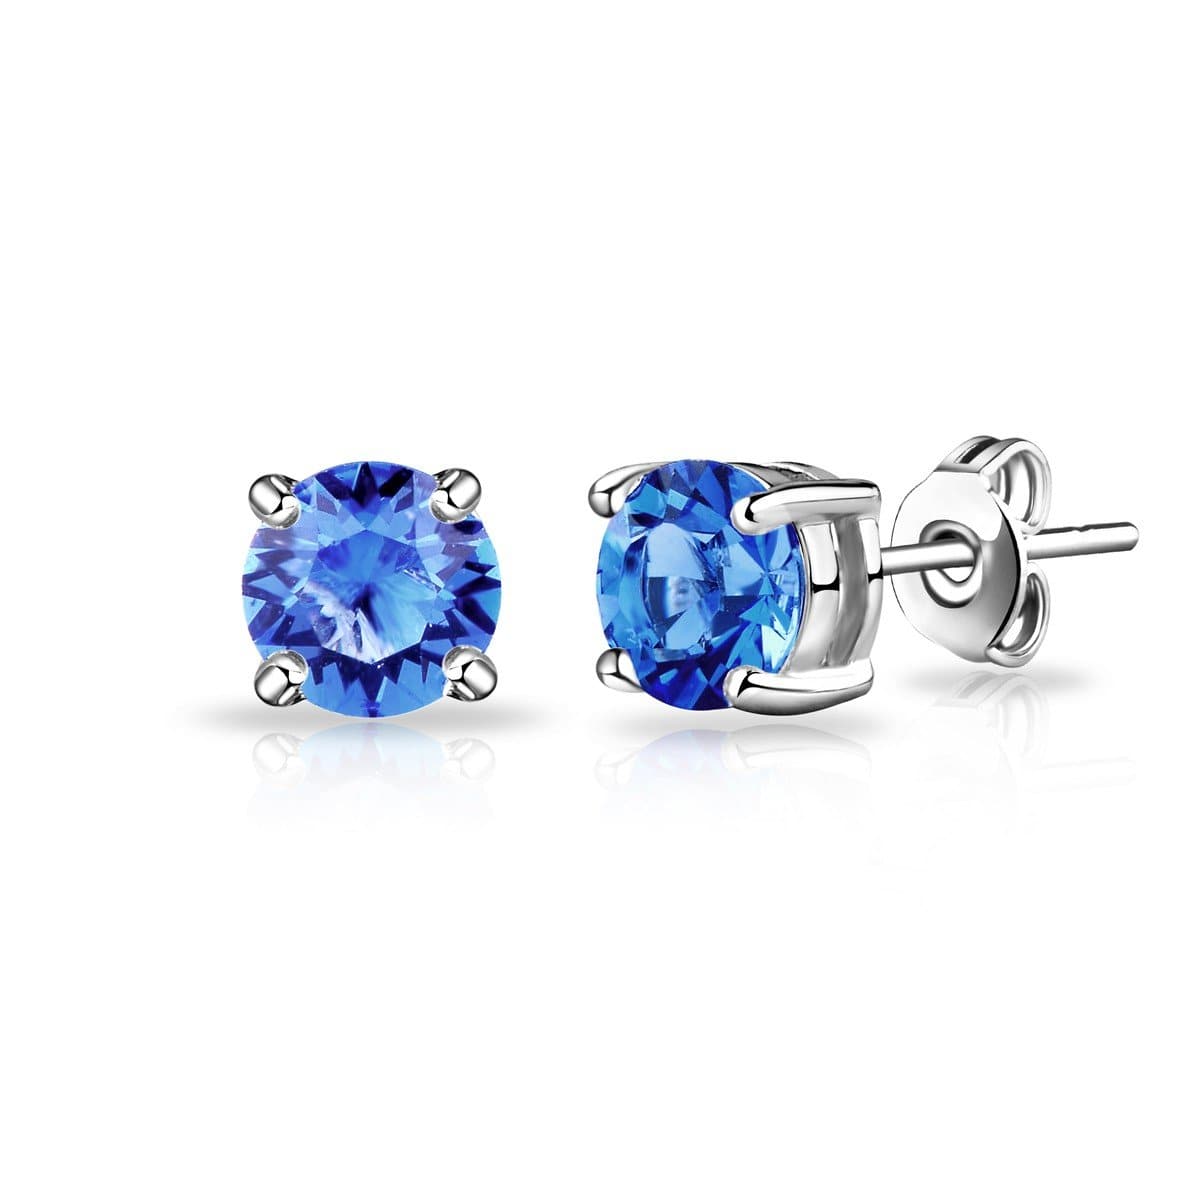 Dark Blue Stud Earrings Created with Zircondia® Crystals by Philip Jones Jewellery